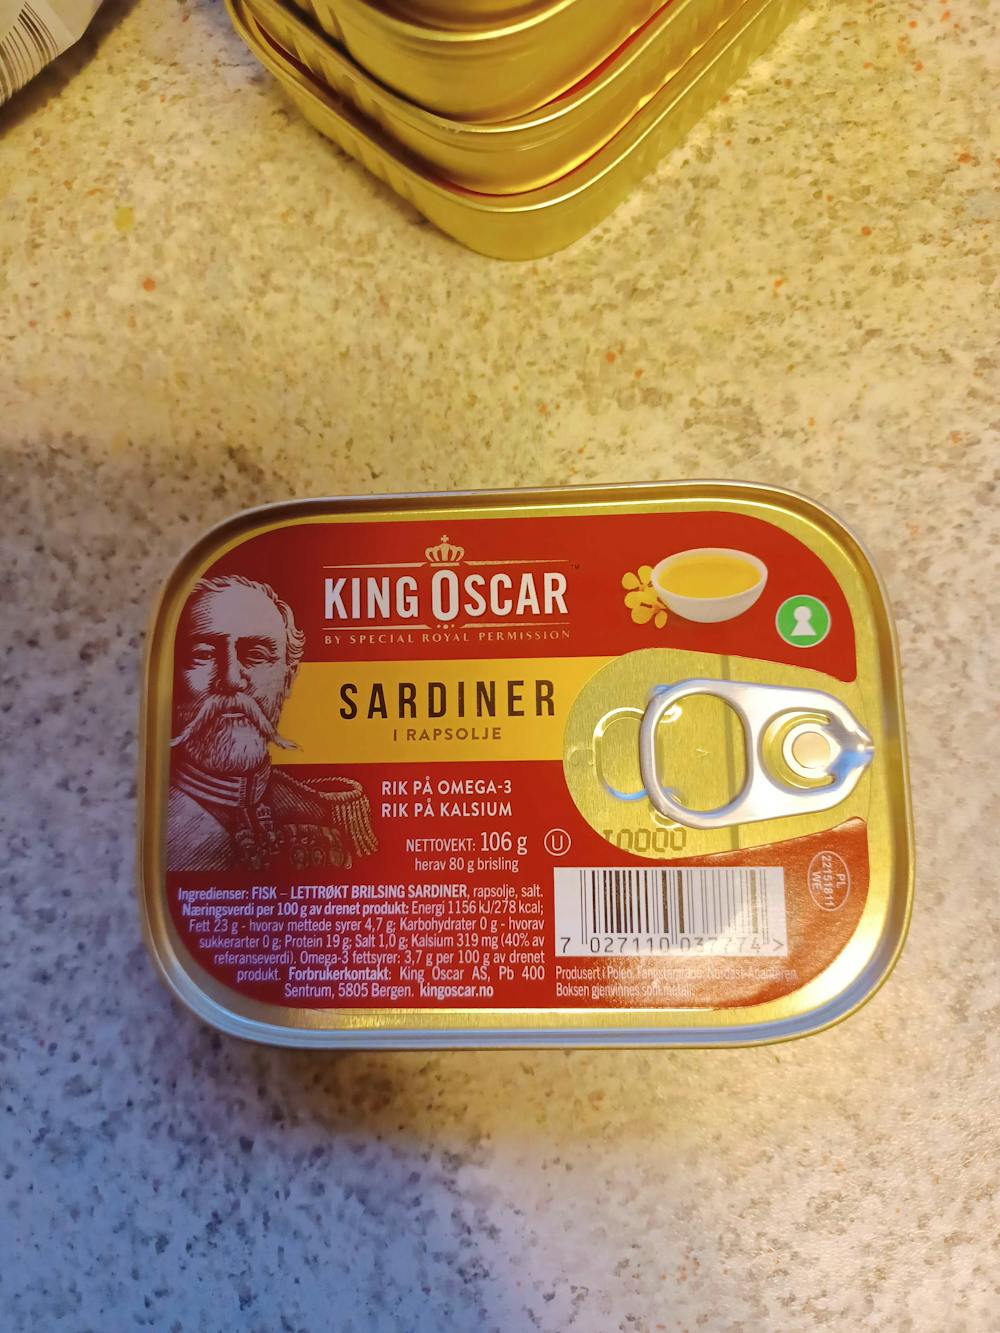 Sardiner, King oscar